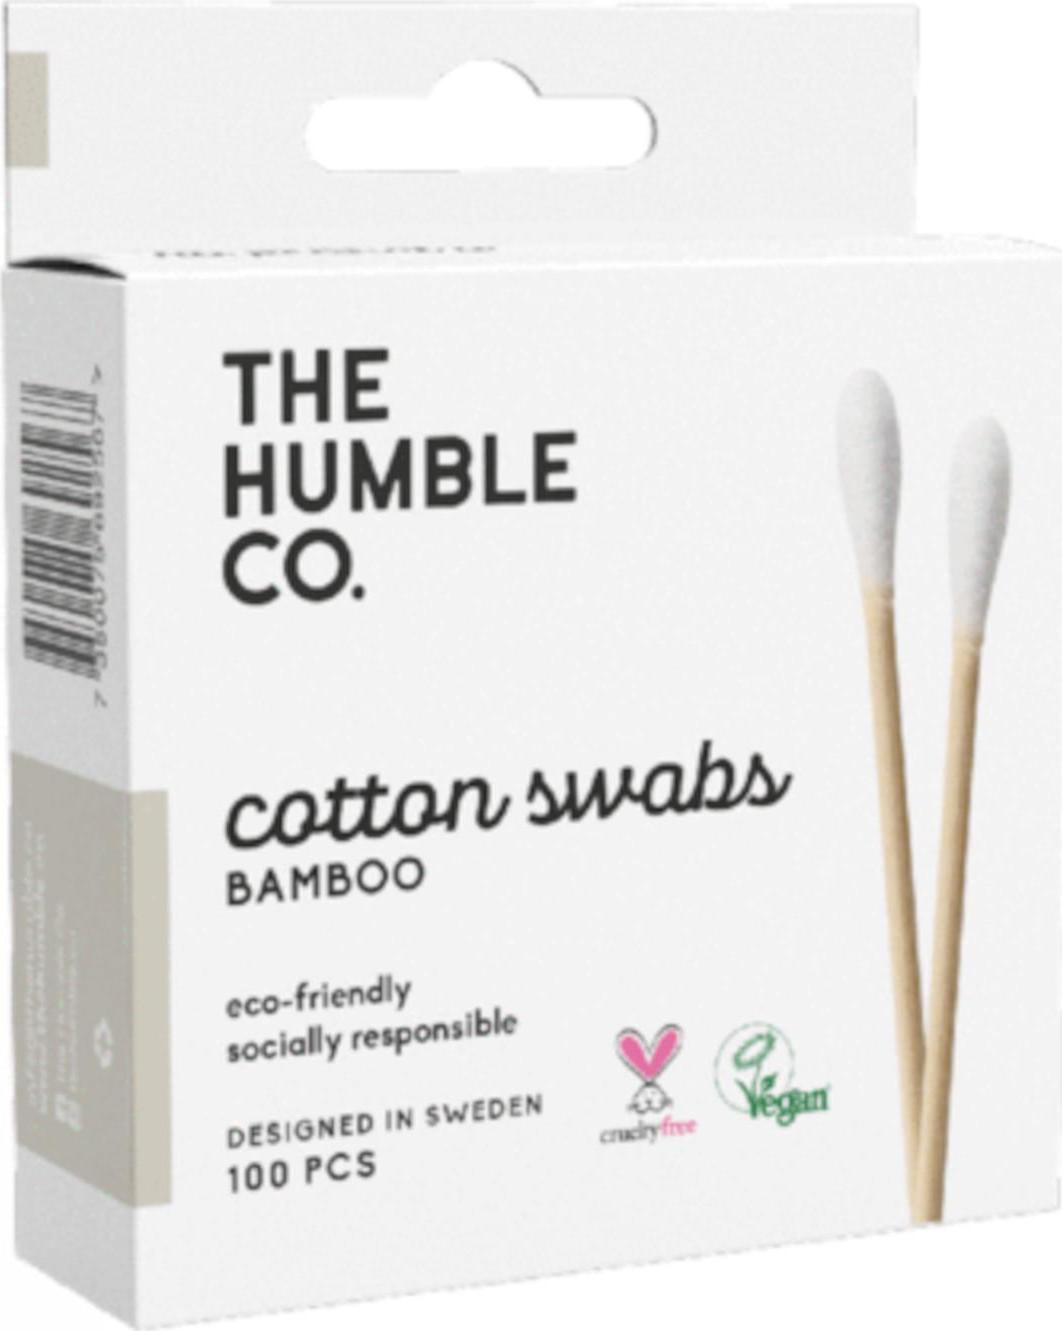 Humble Brush Cotton swabs bamboo